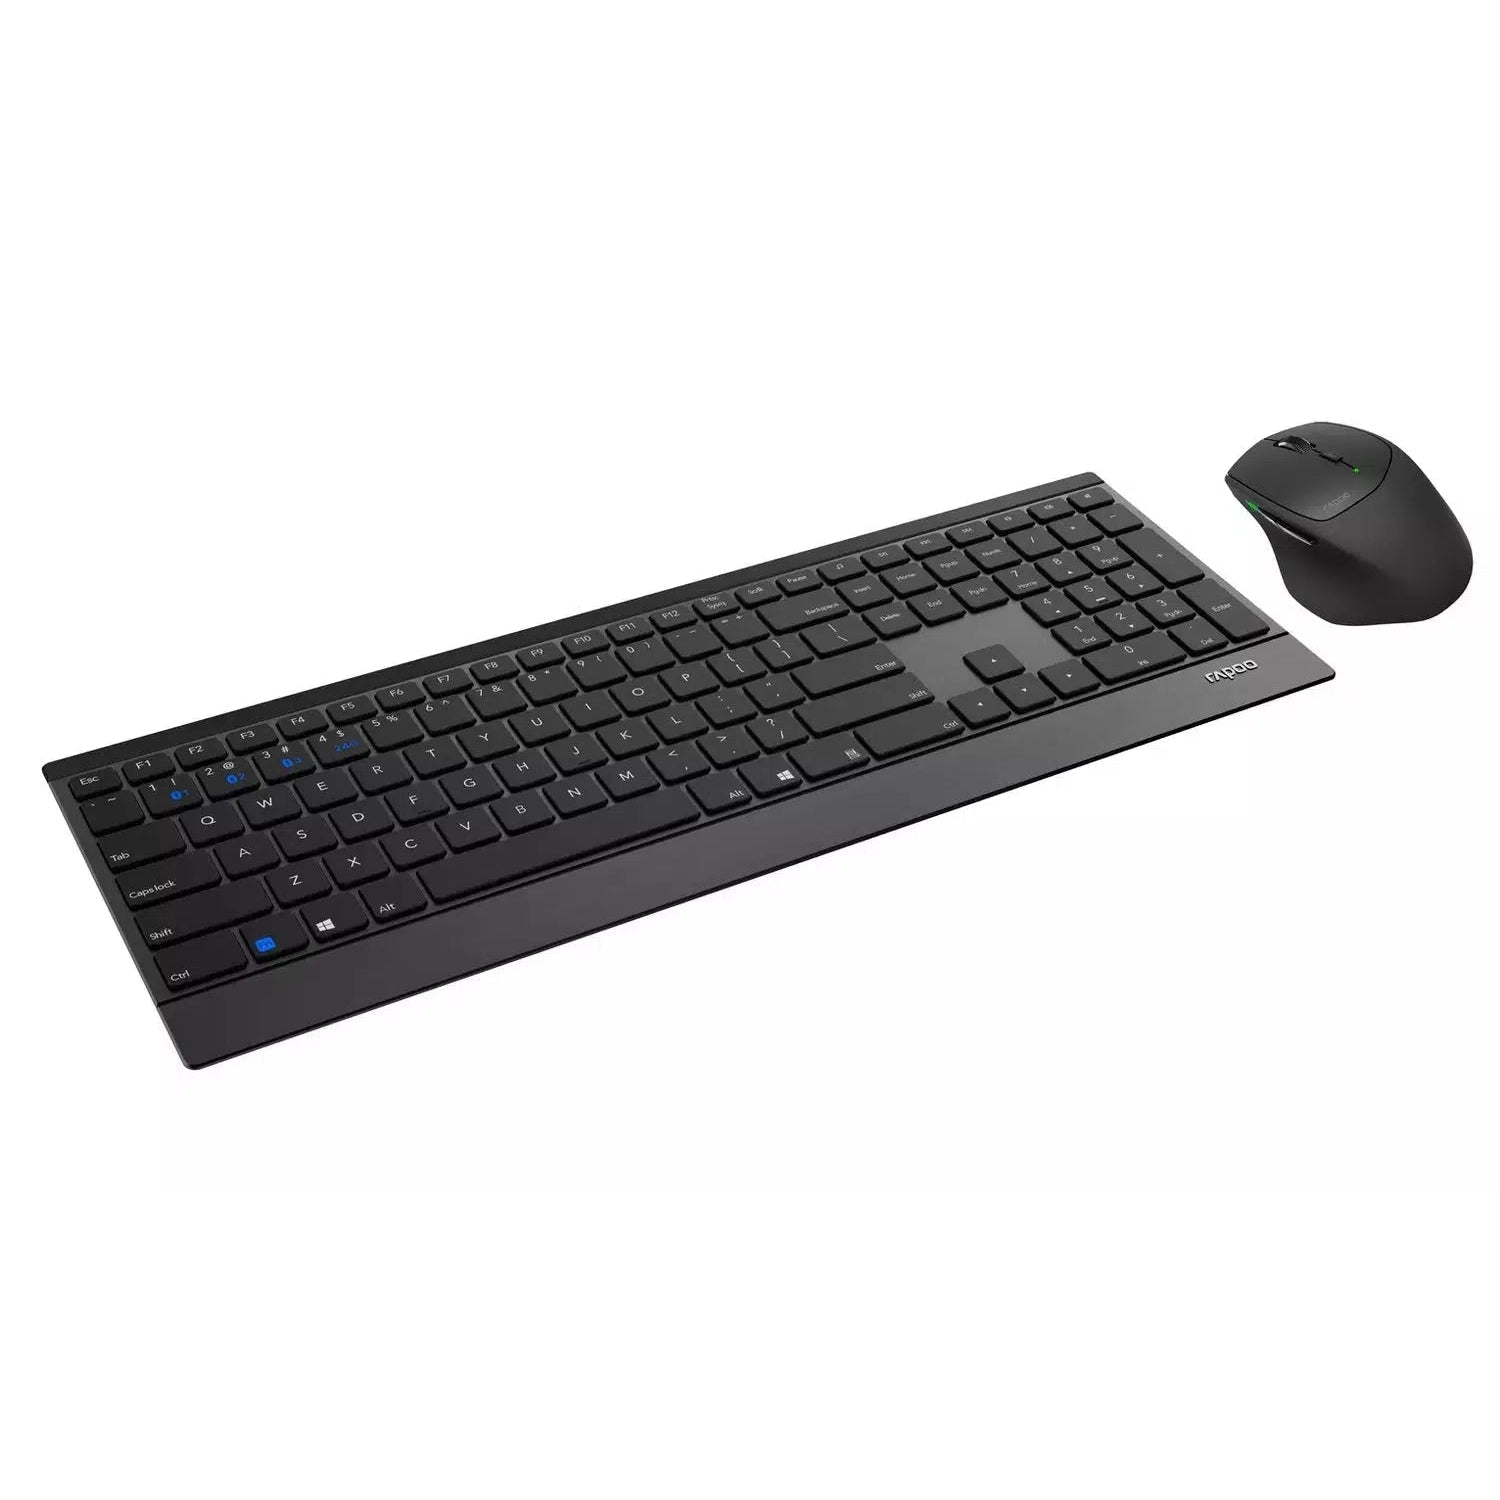 Rapoo 9500M Multi-Mode Wireless Mouse and Keyboard, Black - Refurbished Good